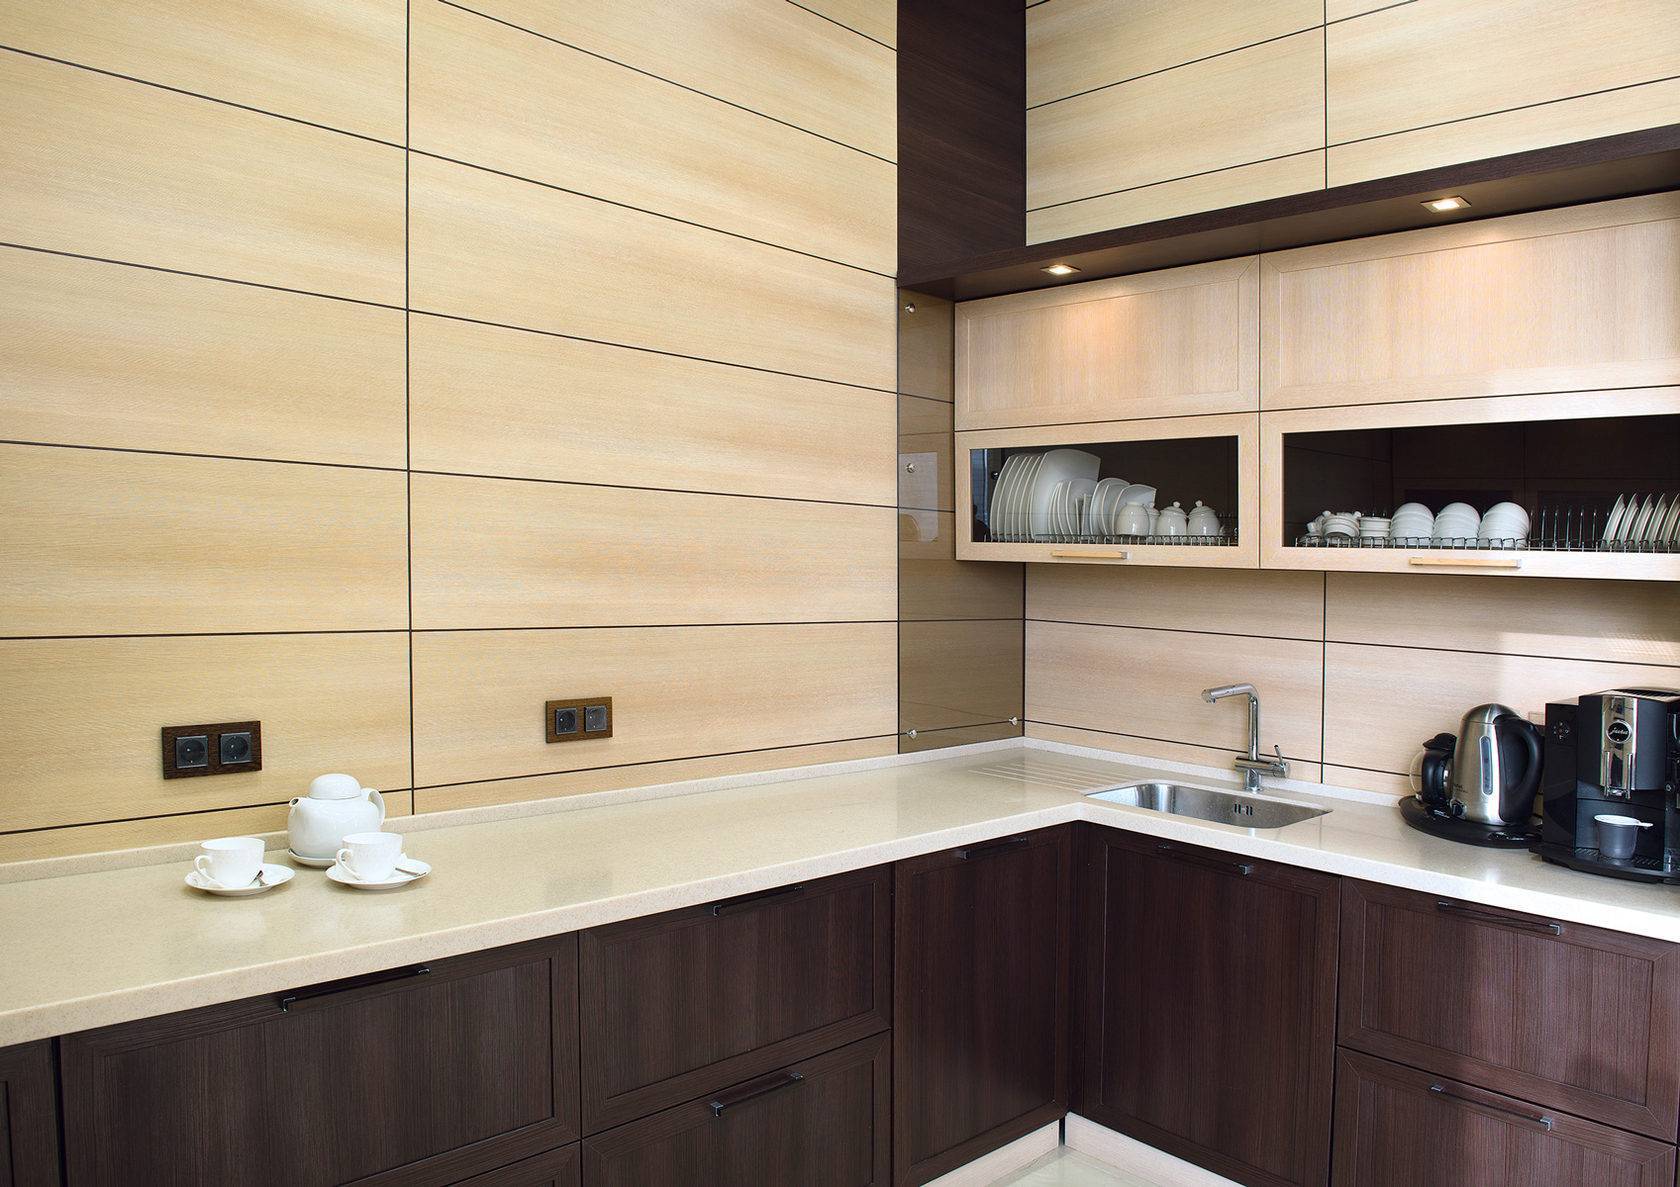 Стеновые панели для кухни из мдф: отделка кухонных стен панелями мдф